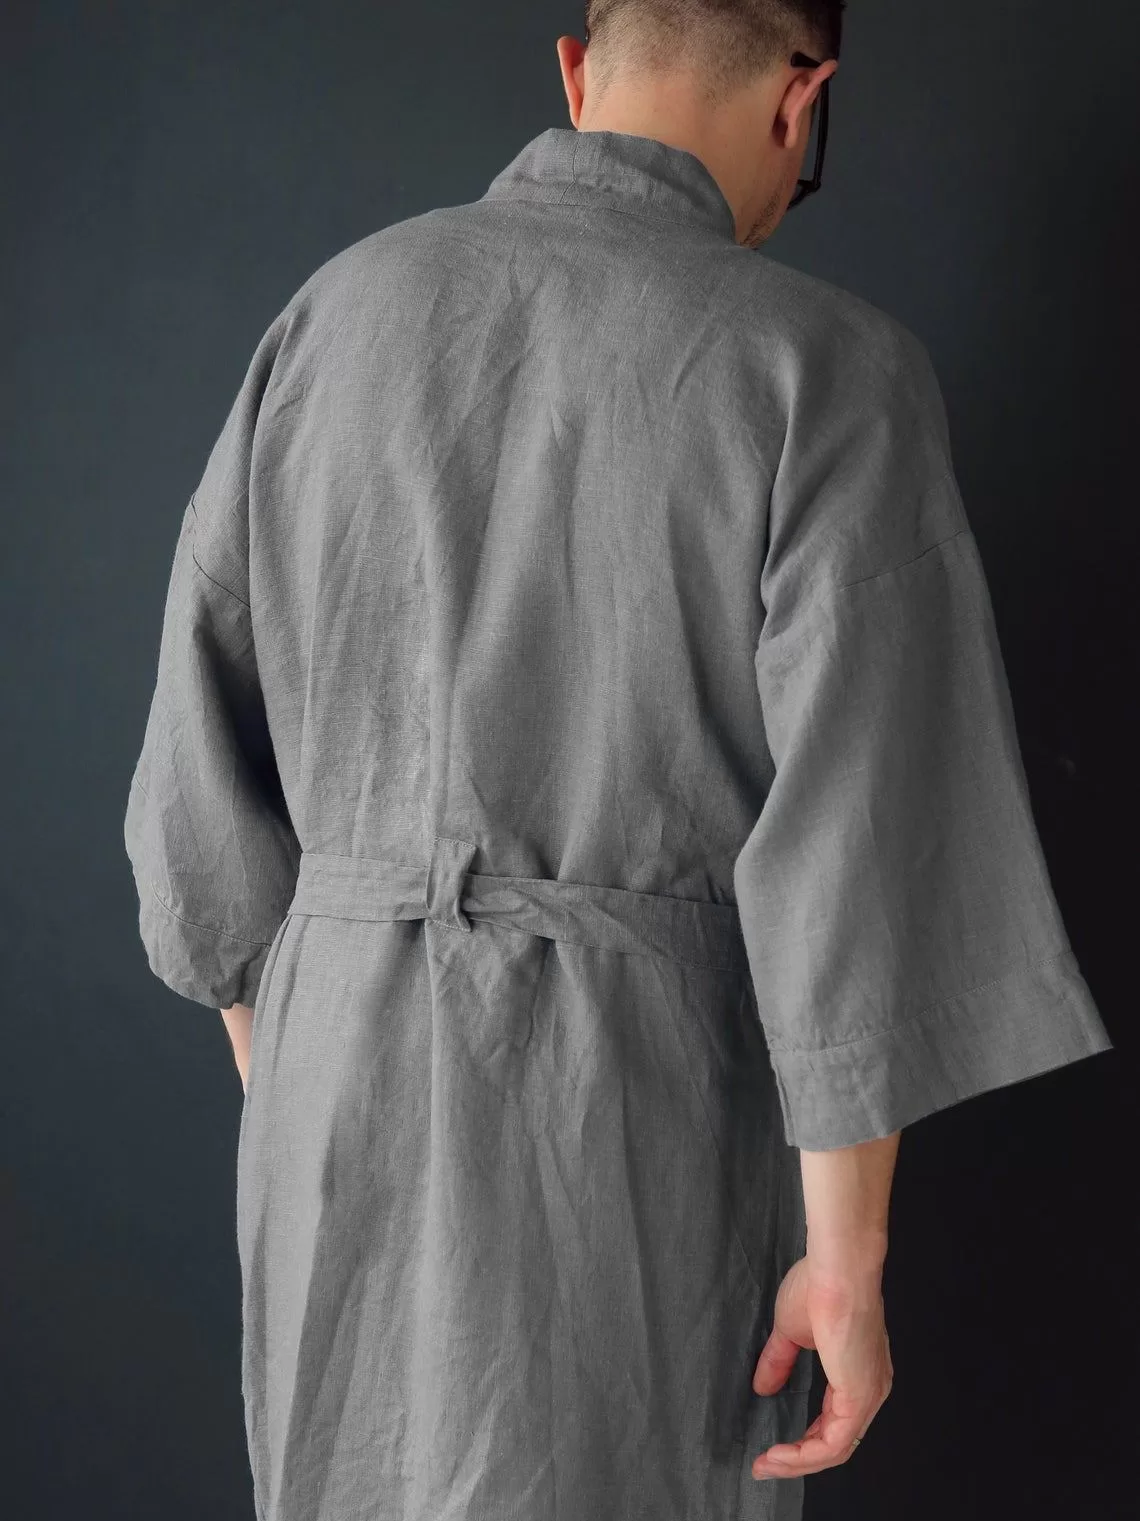 MDNT45 Black Men's Kimono Robe, Loungewear Jacket, Japanese Kimono Men, Mens Linen Shirt, Plus Size Kimono Cardigan, Homewear Linen Clothing, A0344